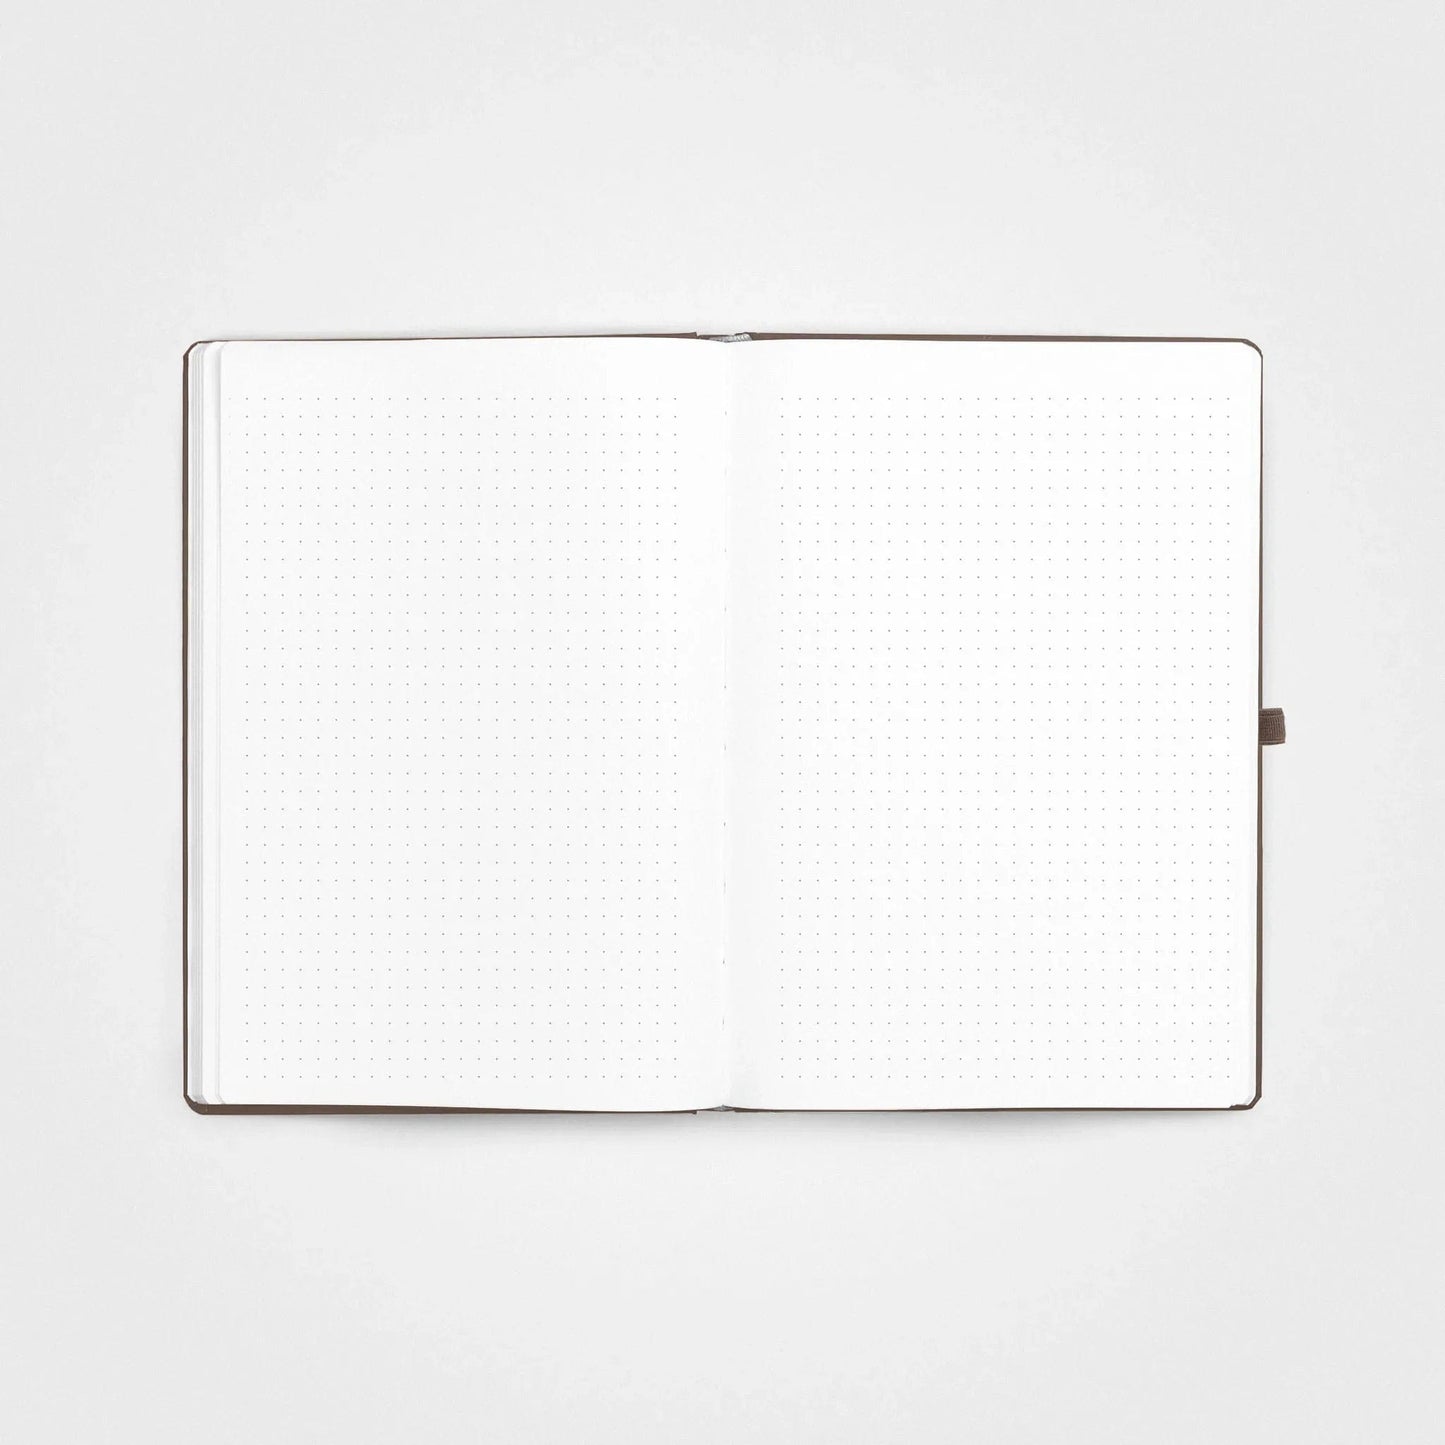 Steinpapier-Notizbuch – A5 Hardcover, Earth Brown